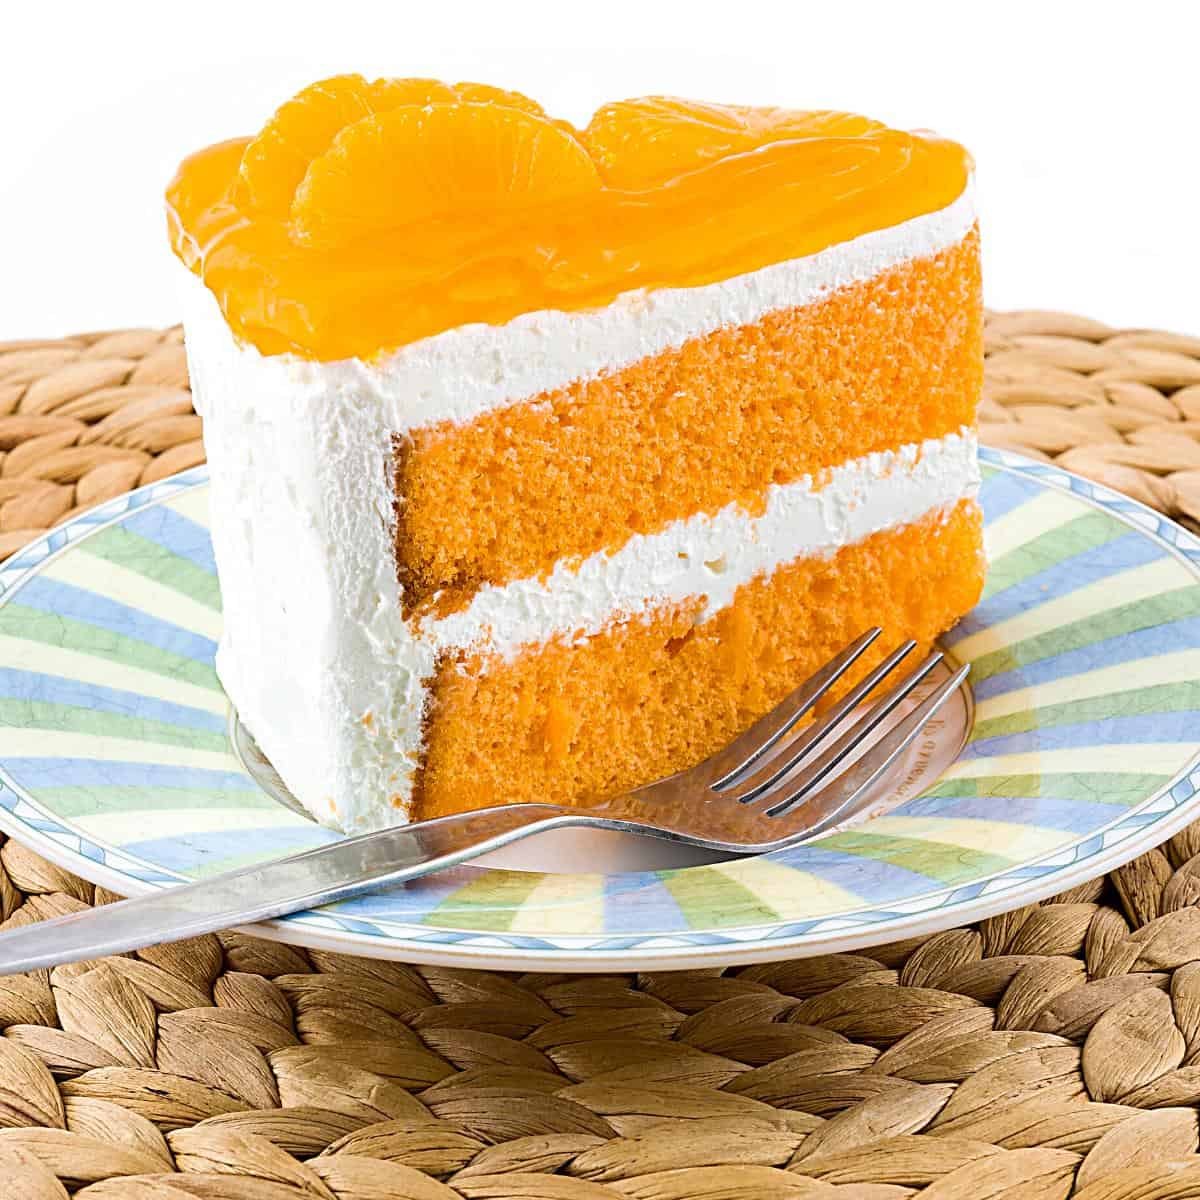 Orange cake on a plate.